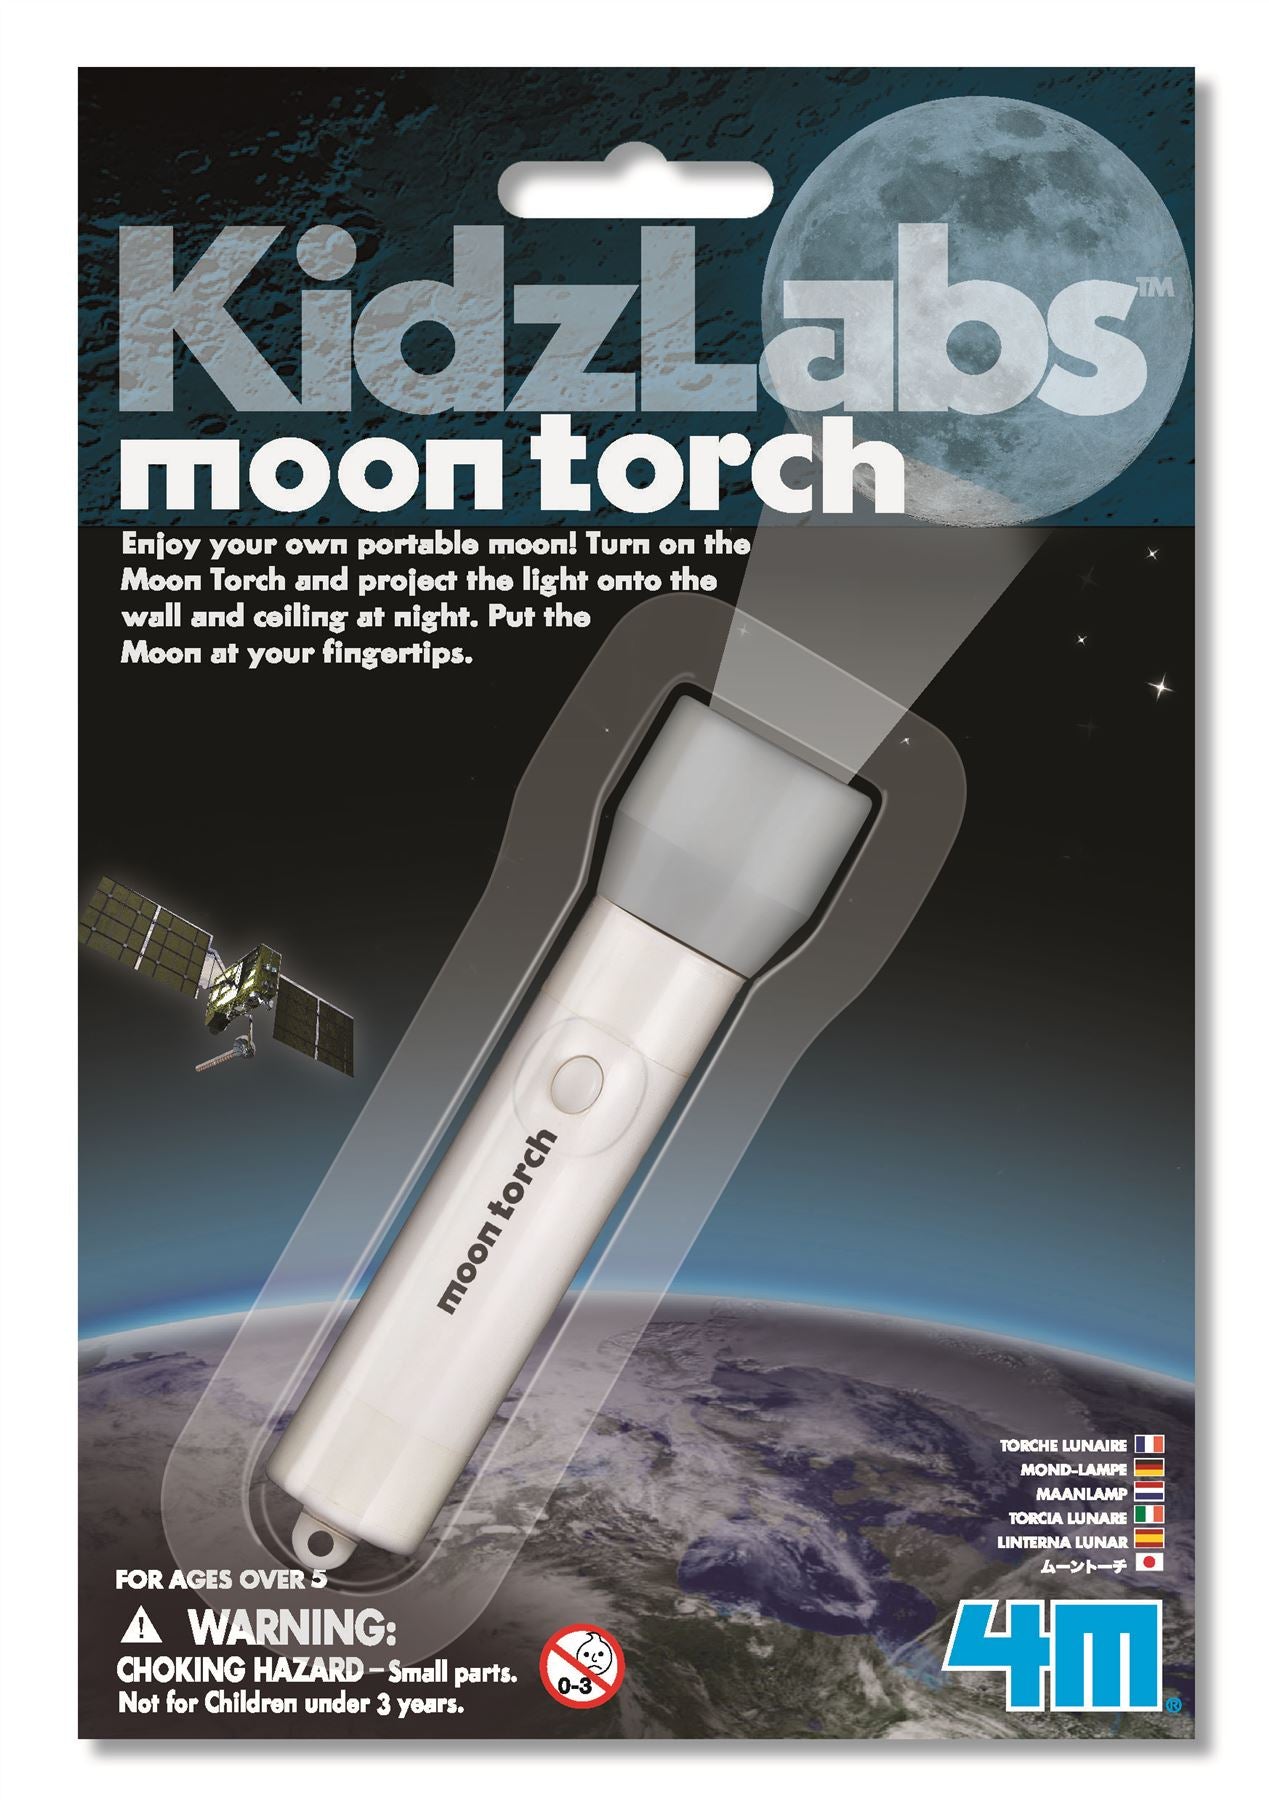 Great Gizmos 4M KidzLabs Moon Torch